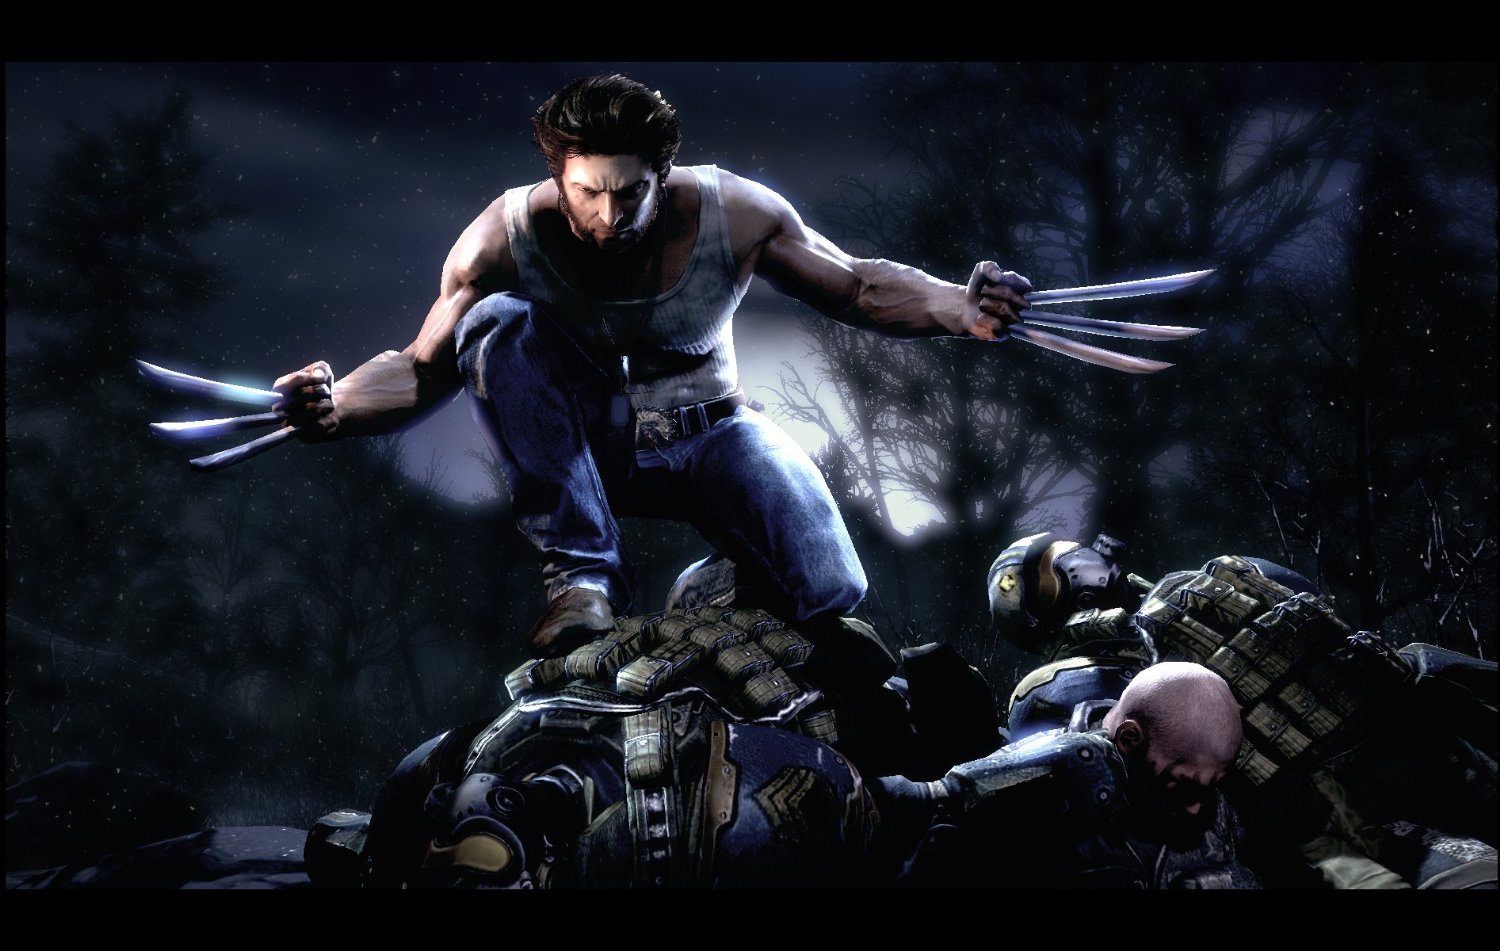 XսǰǣX-Men Origins Wolverine v1.0 4޸